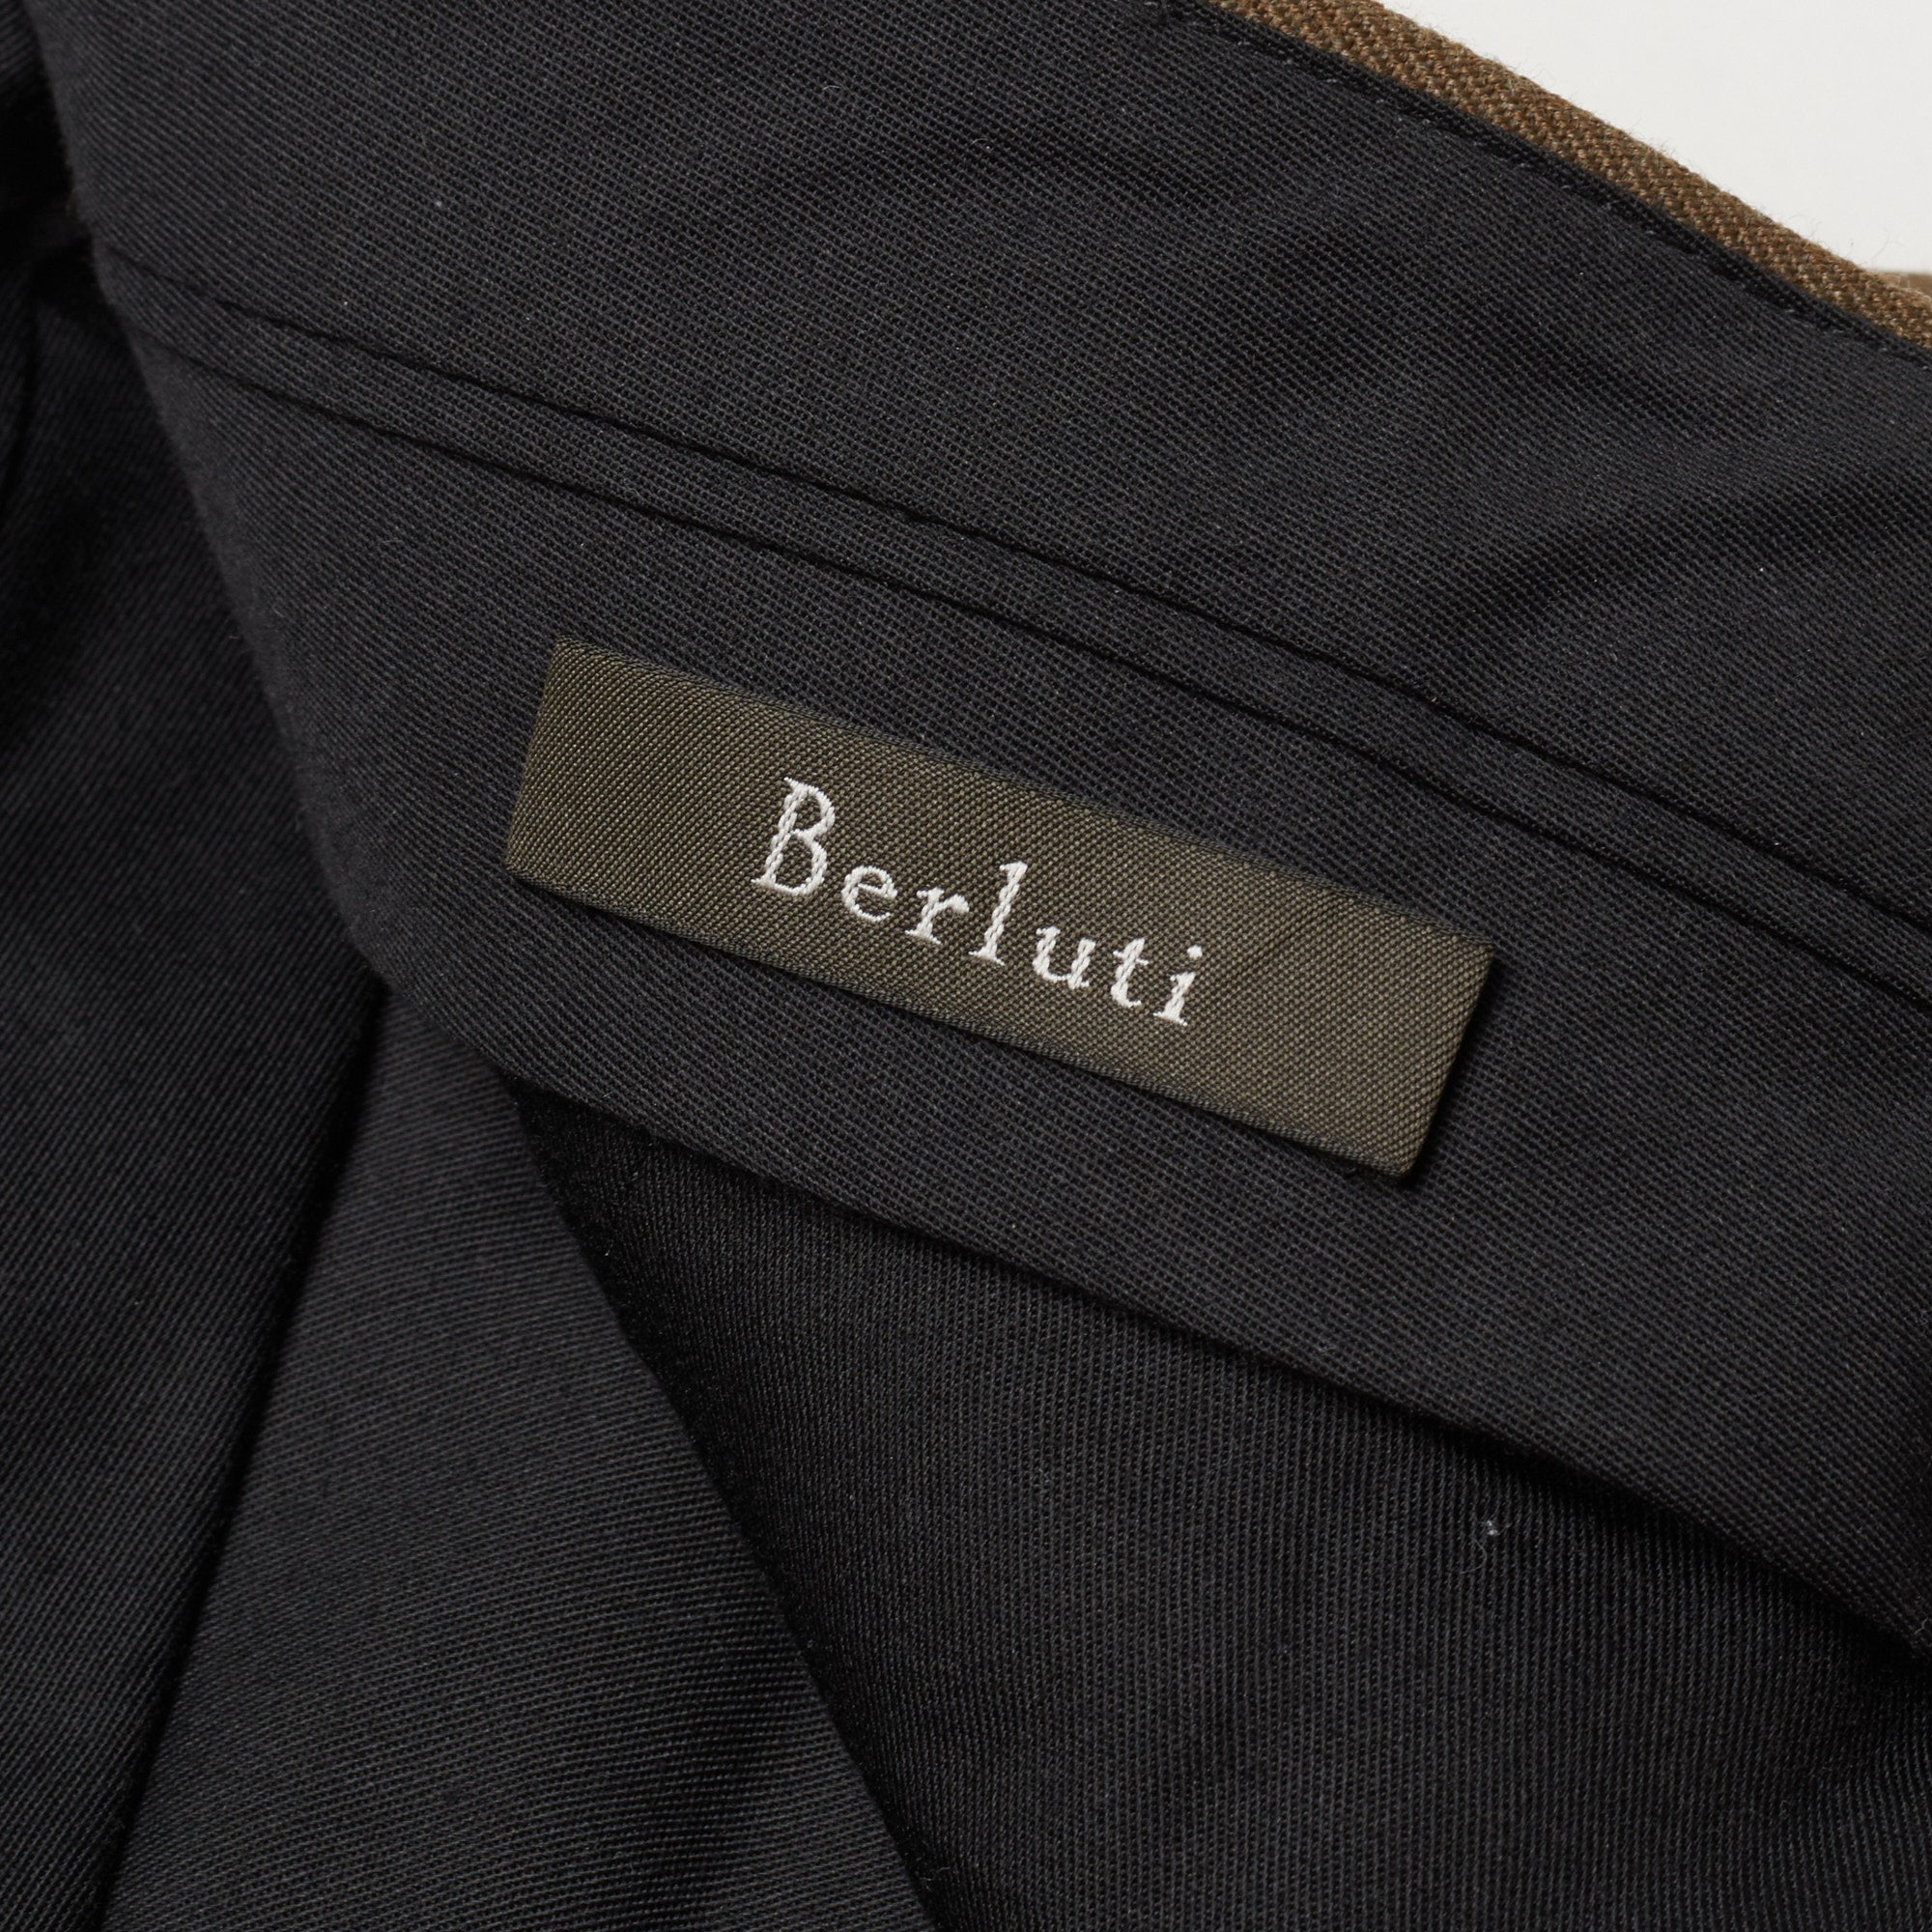 BERLUTI Paris Brown Twill Virgin Wool Blend Slim Fit Chino Pants EU 50 NEW US 34 BERLUTI